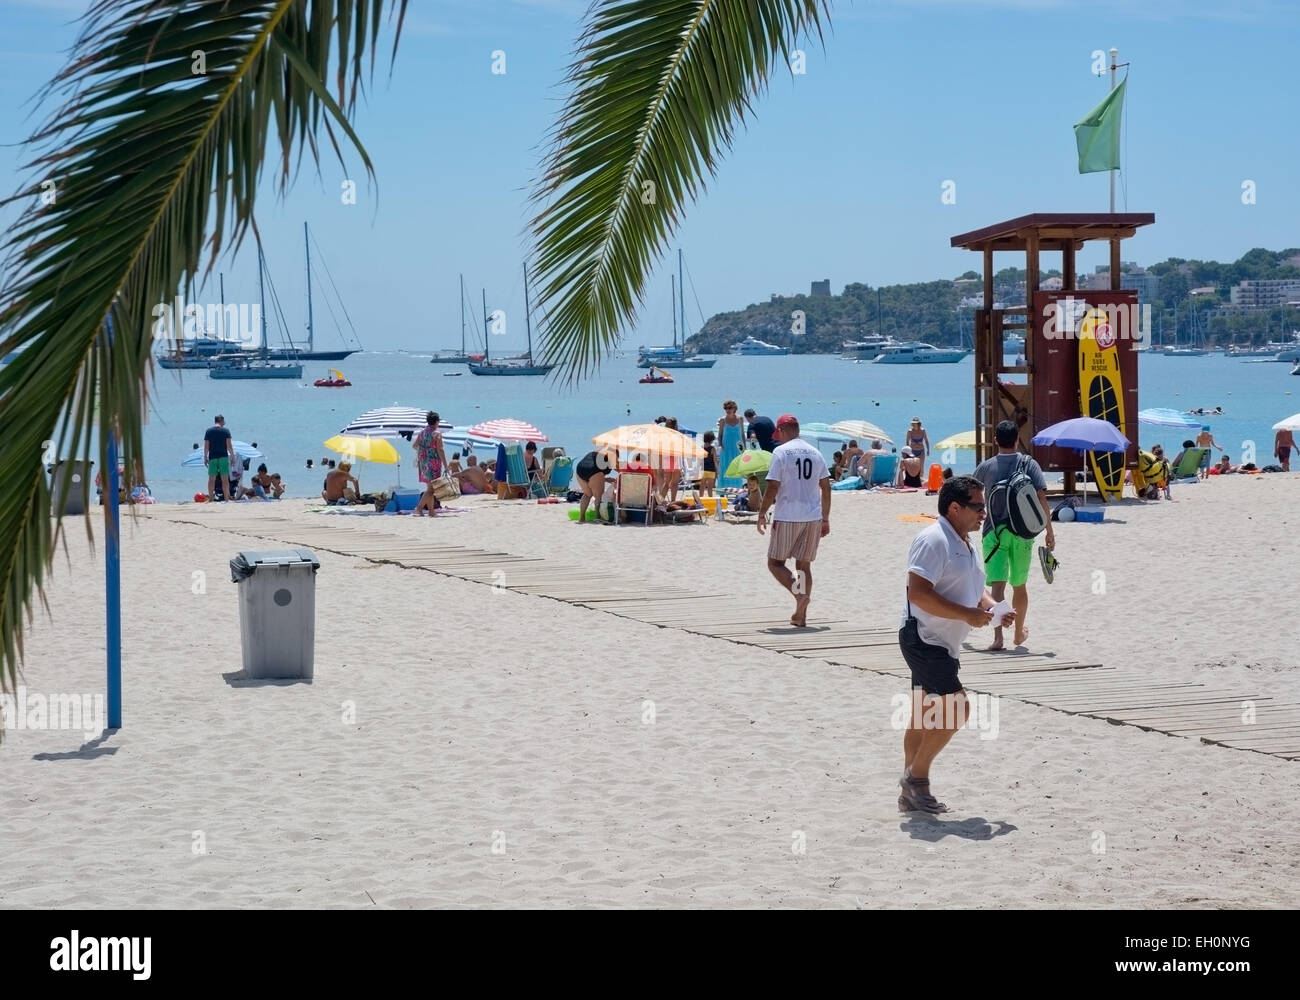 PALMA NOVA, MALLORCA, BALEARIC ISLANDS, SPAIN - JULY 20, 2014: Beach scene with tourists and sunbathers, boats moored at sea on Stock Photo